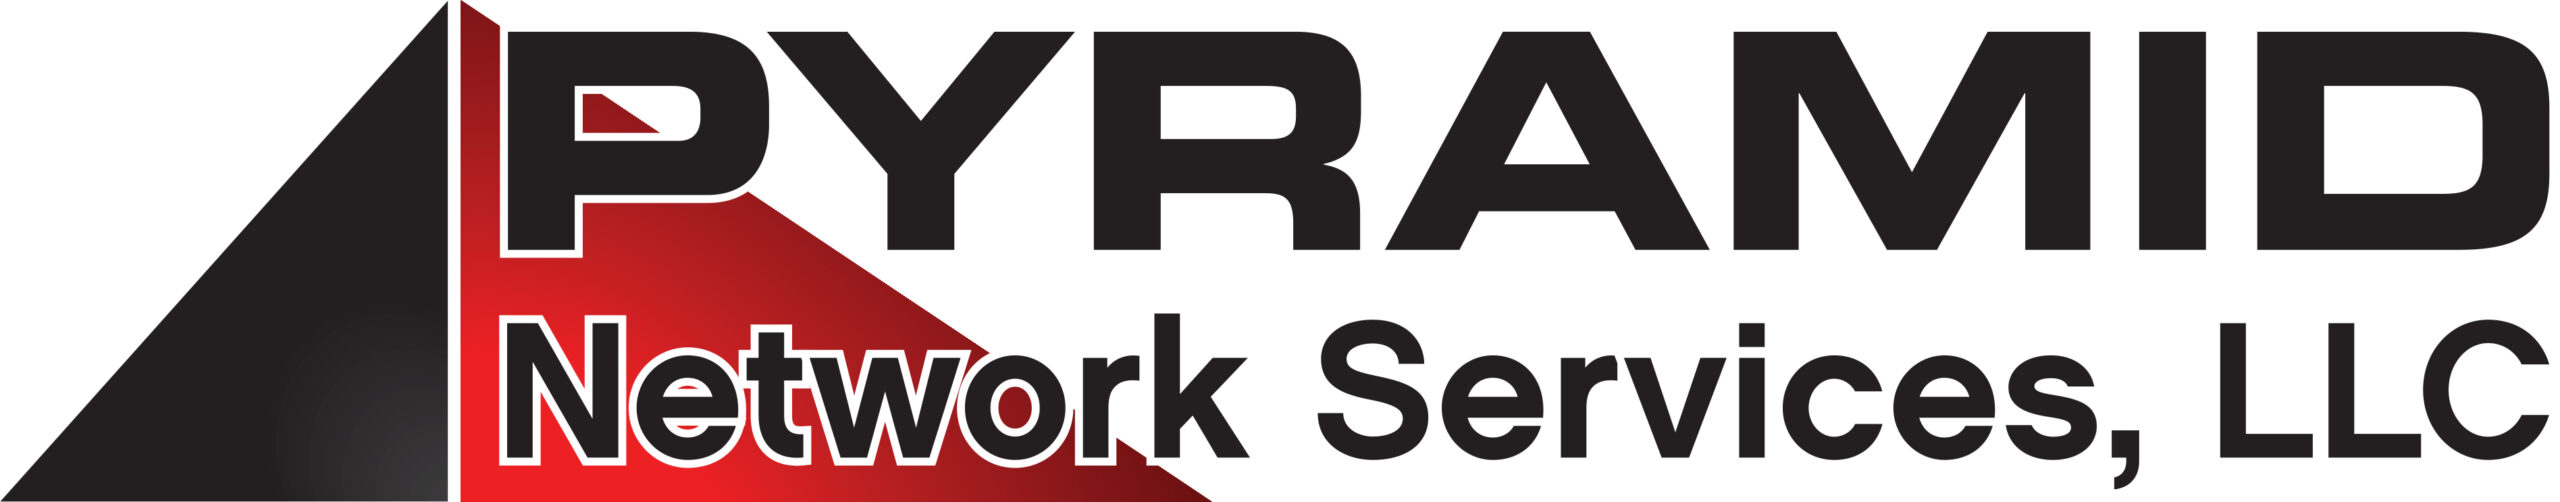 Pyramid Network Services, LLC